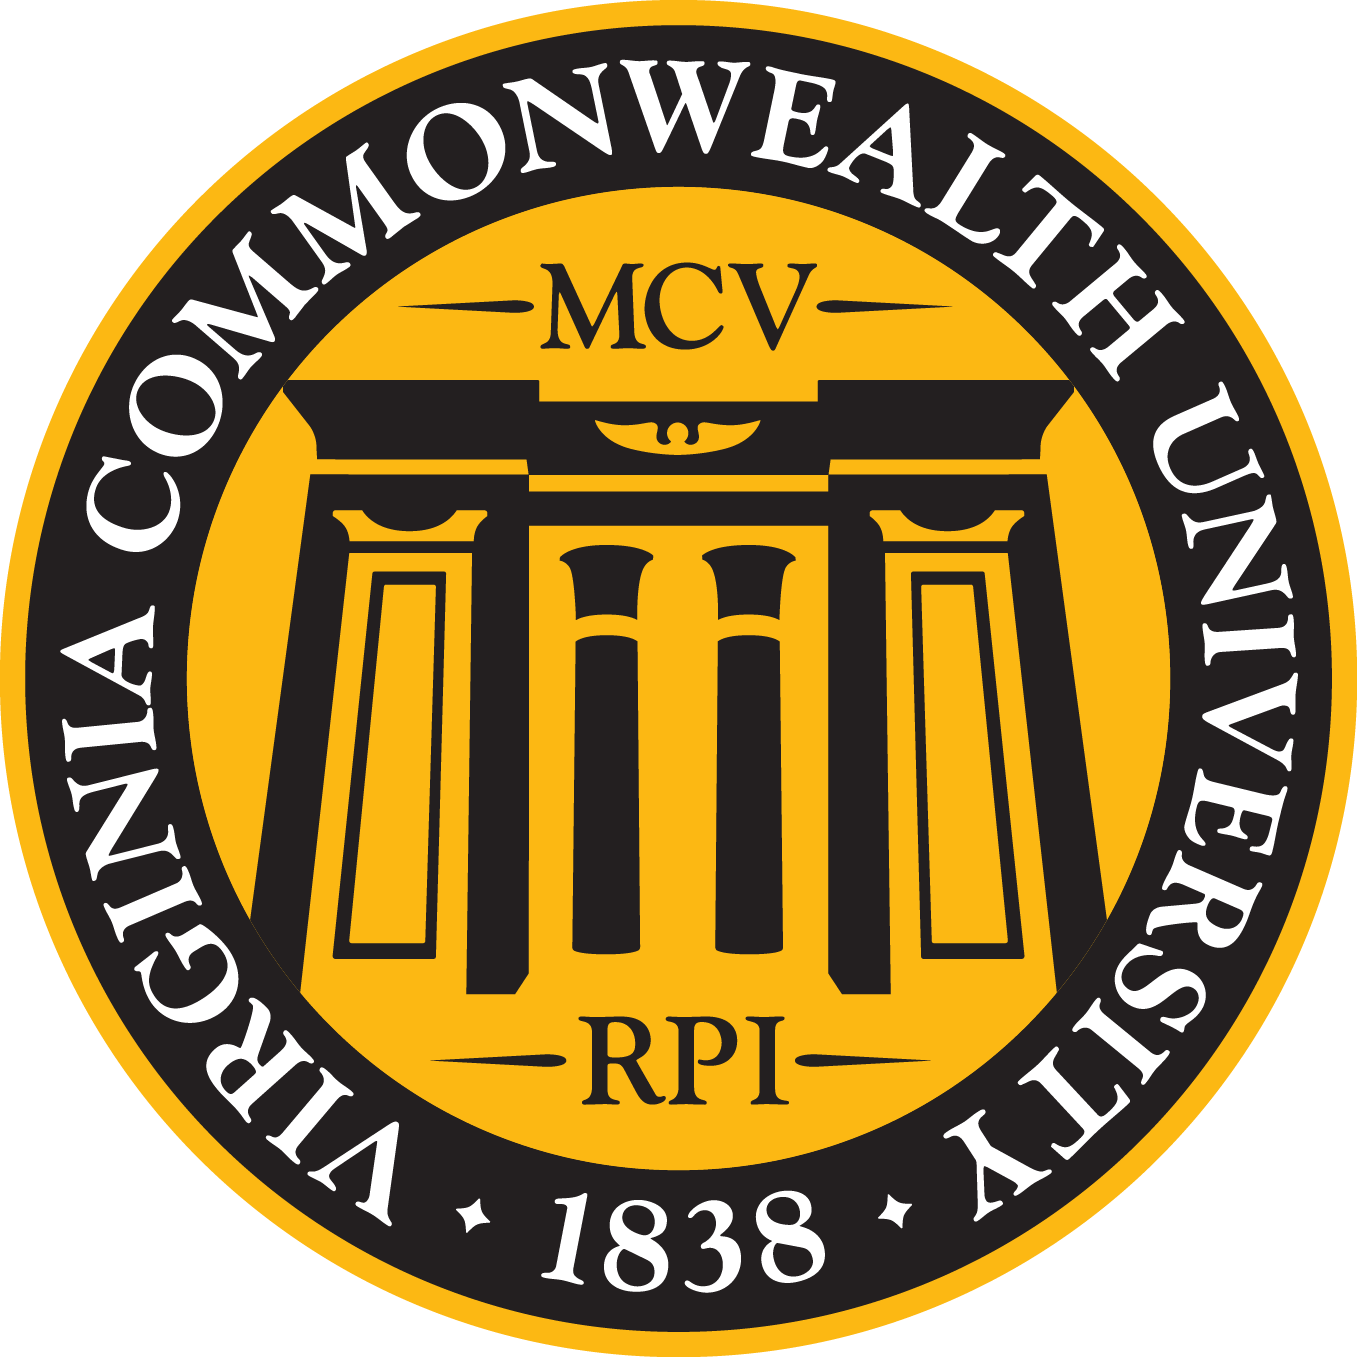 VCU Logo [vcu.edu   Virginia Commonwealth University] png